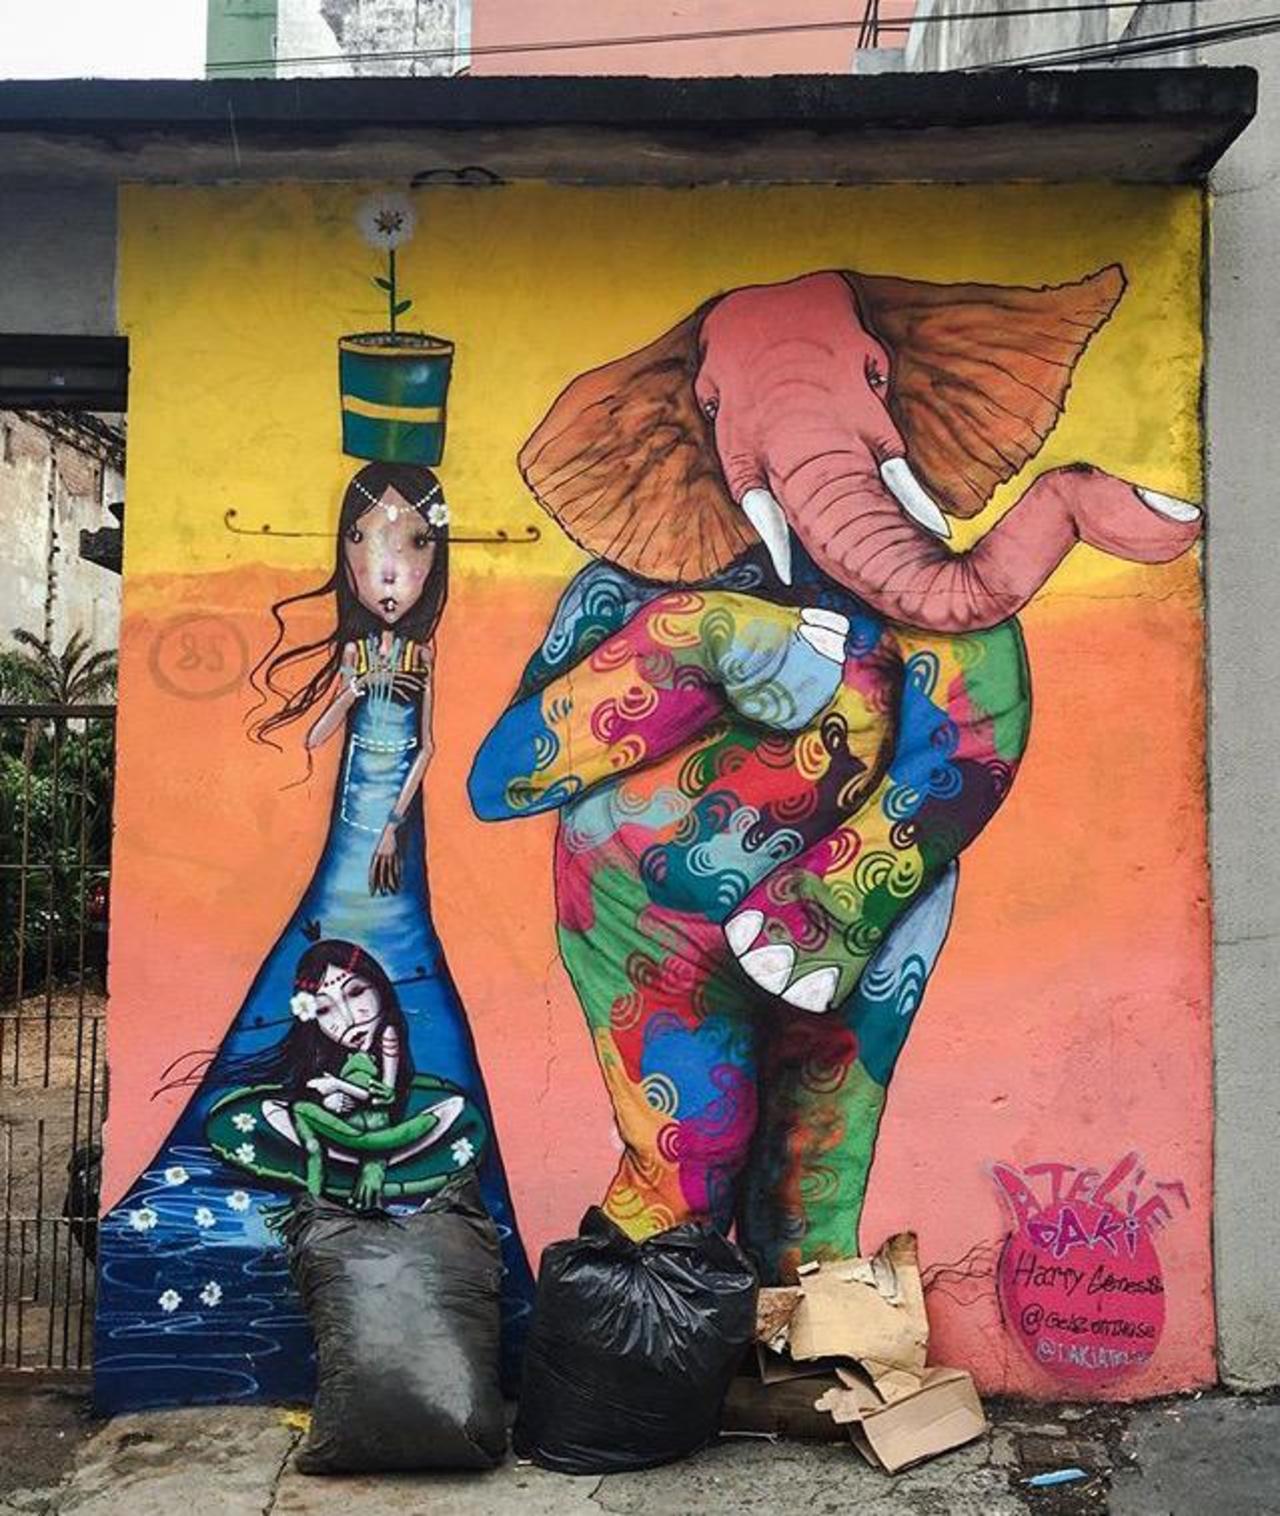 Street Art by Harry Geneis & Gelson in São Paulo #art #mural #graffiti #streetart http://t.co/SlLbhuMZfD … … … …… http://twitter.com/charlesjackso14/status/648021496900808704